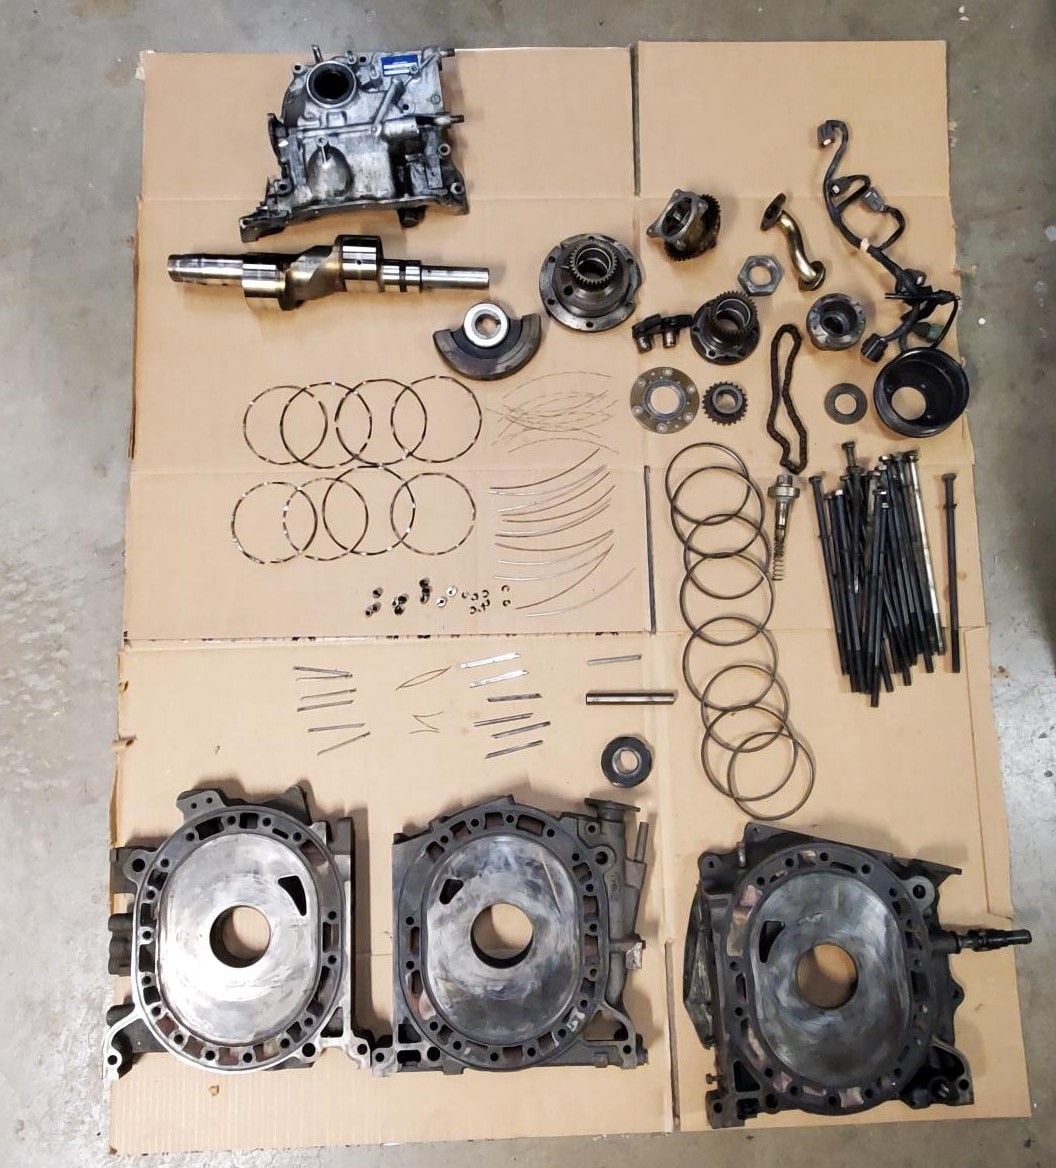 Engine - Internals - 13B-REW Parts, Eccentric Shaft, irons, etc. - Used - 1993 to 2002 Mazda RX-7 - Santa Barbara, CA 93117, United States